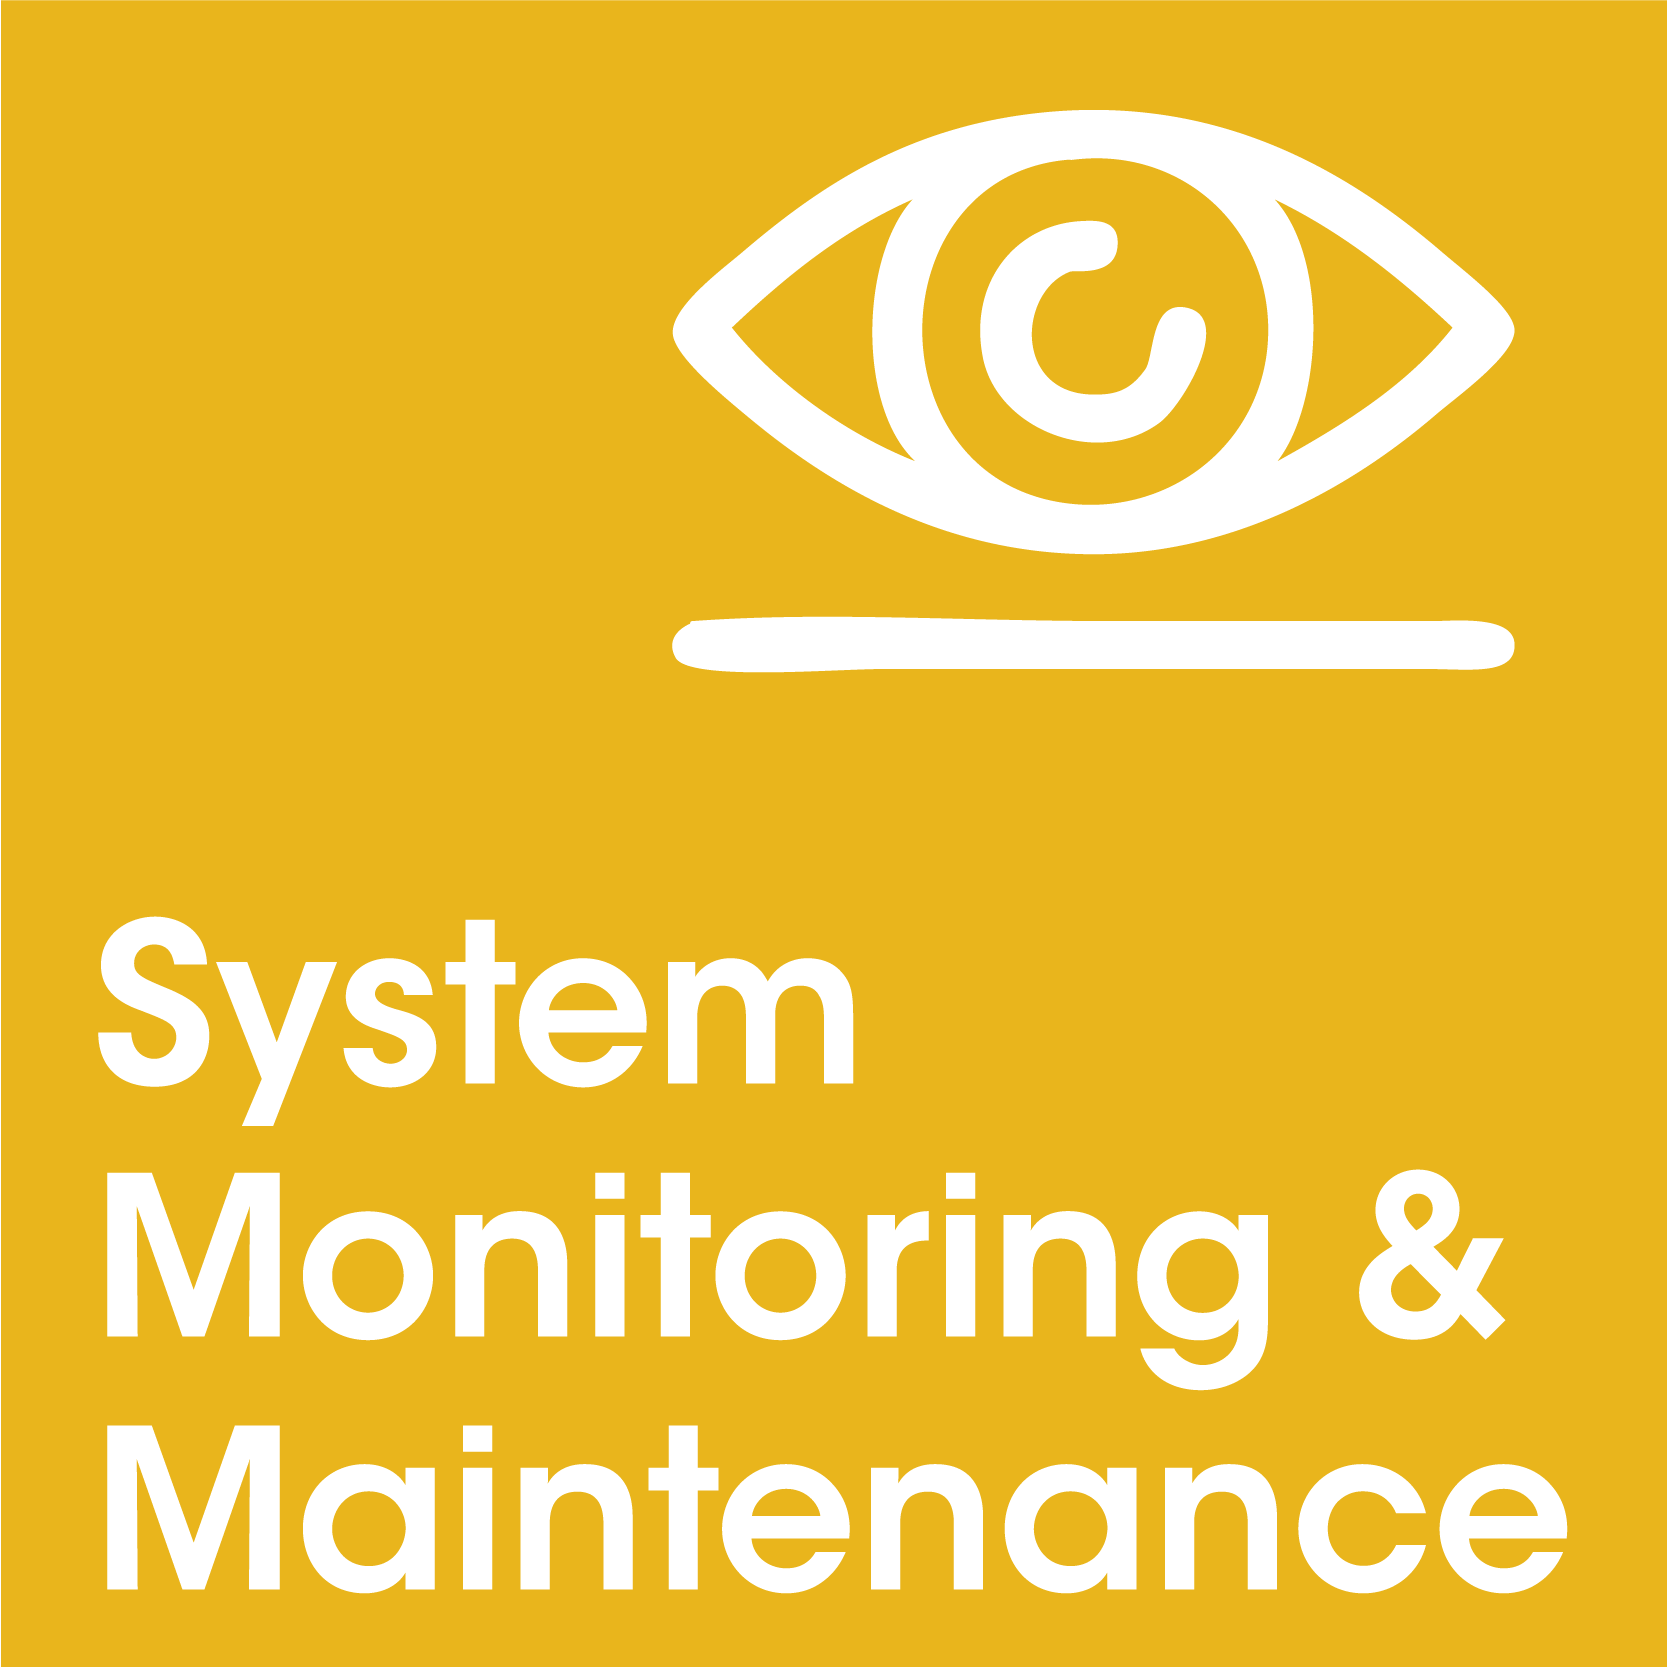 System monitoring and maintenance block